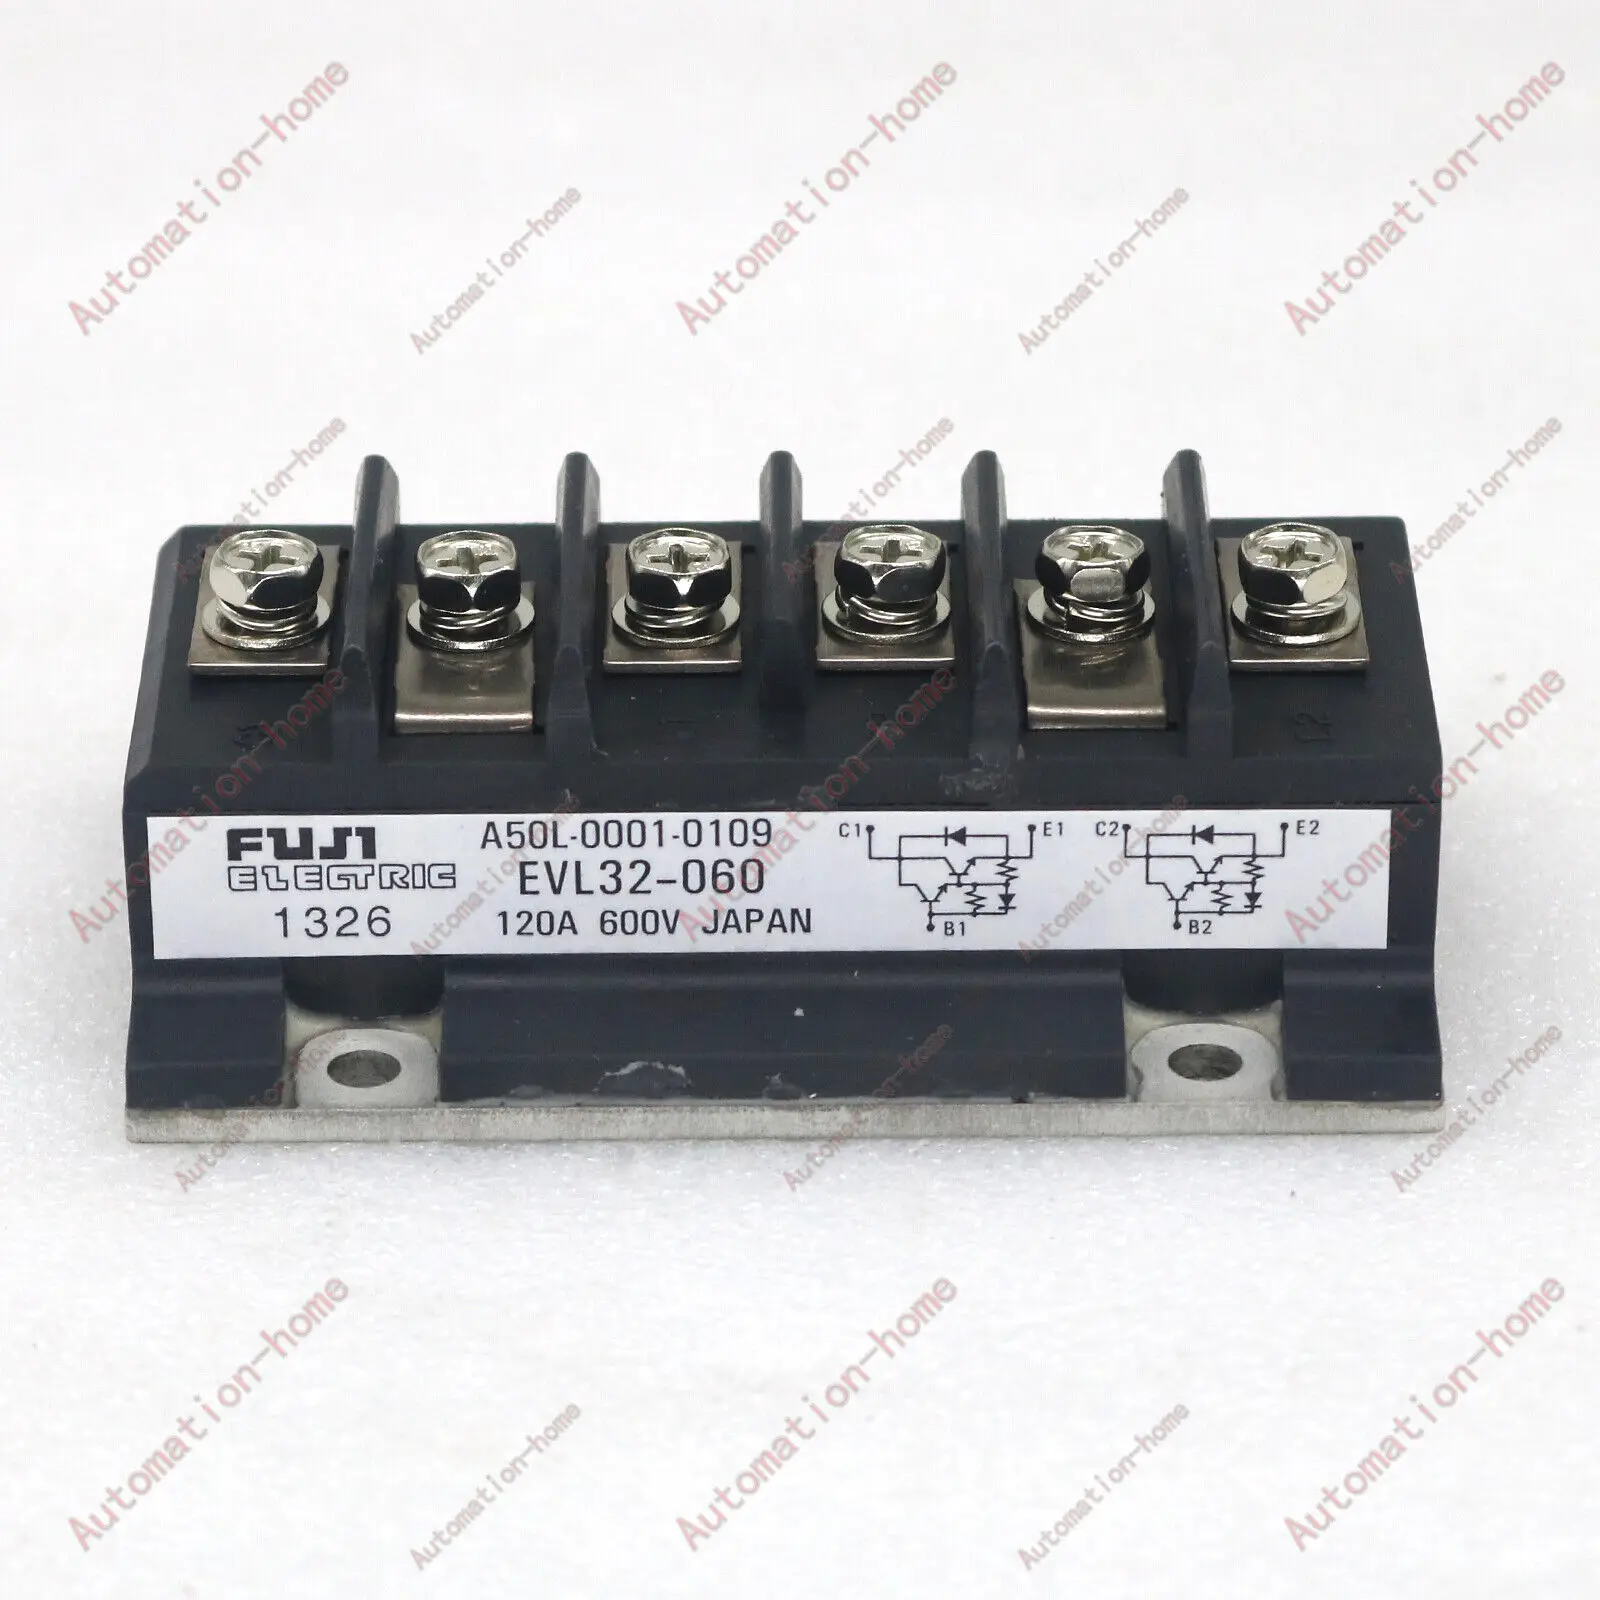 

1PCS New FUJI EVL32-060 Module A50L-0001-0109 Module Power Supply#QW